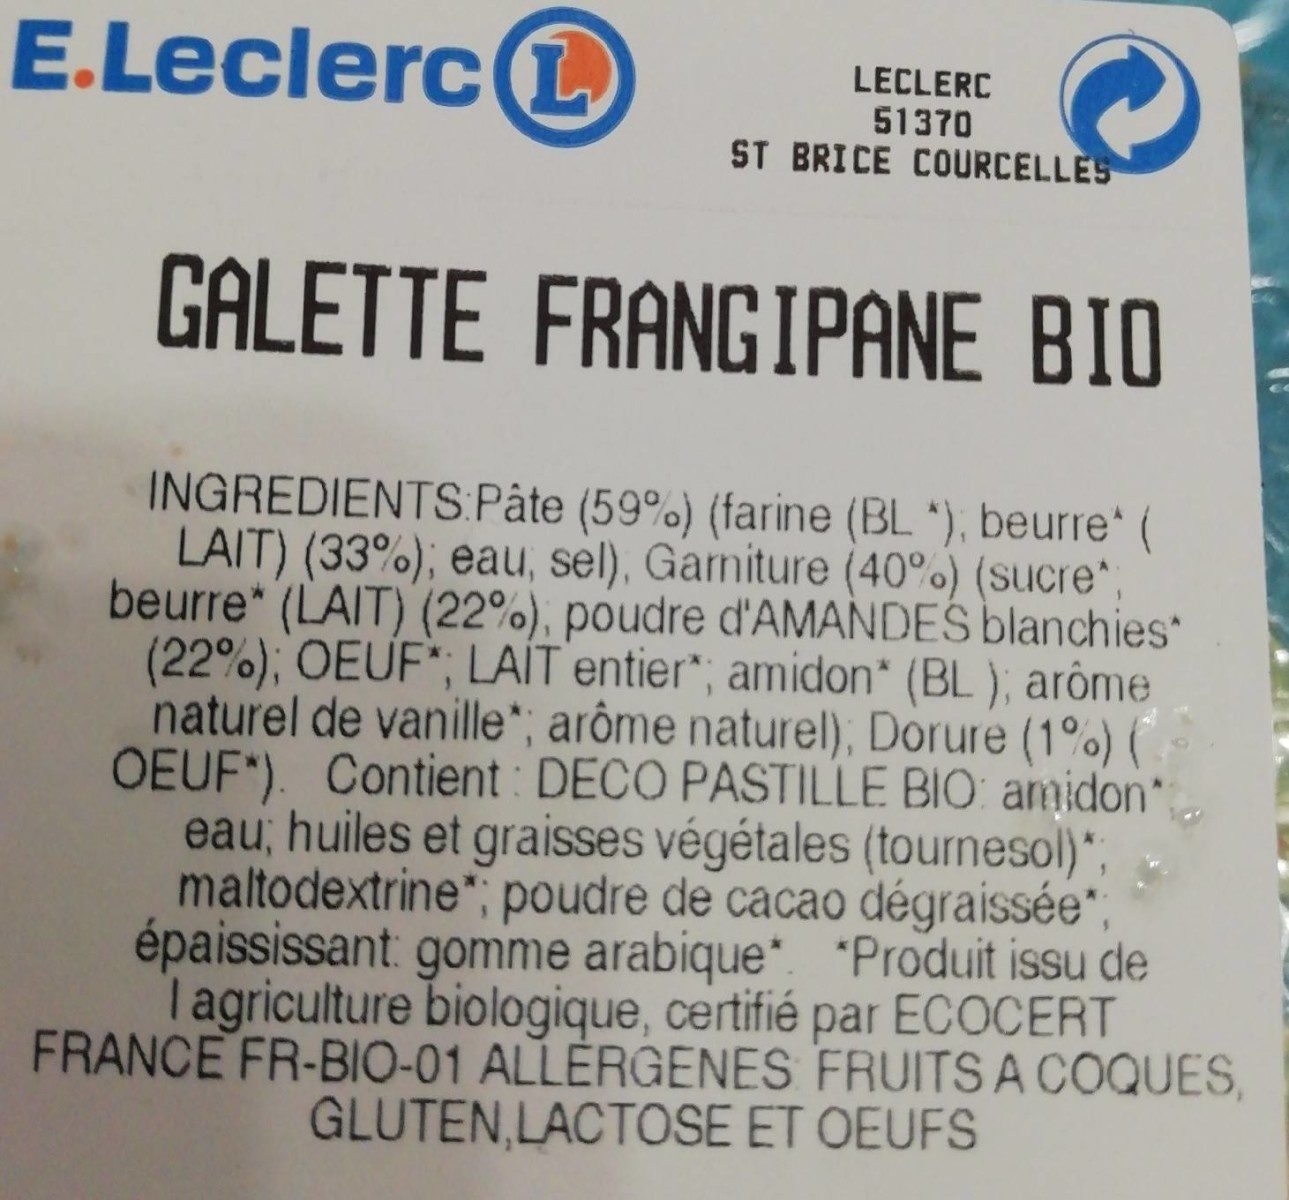 Galette frangipane bio - Ingrédients